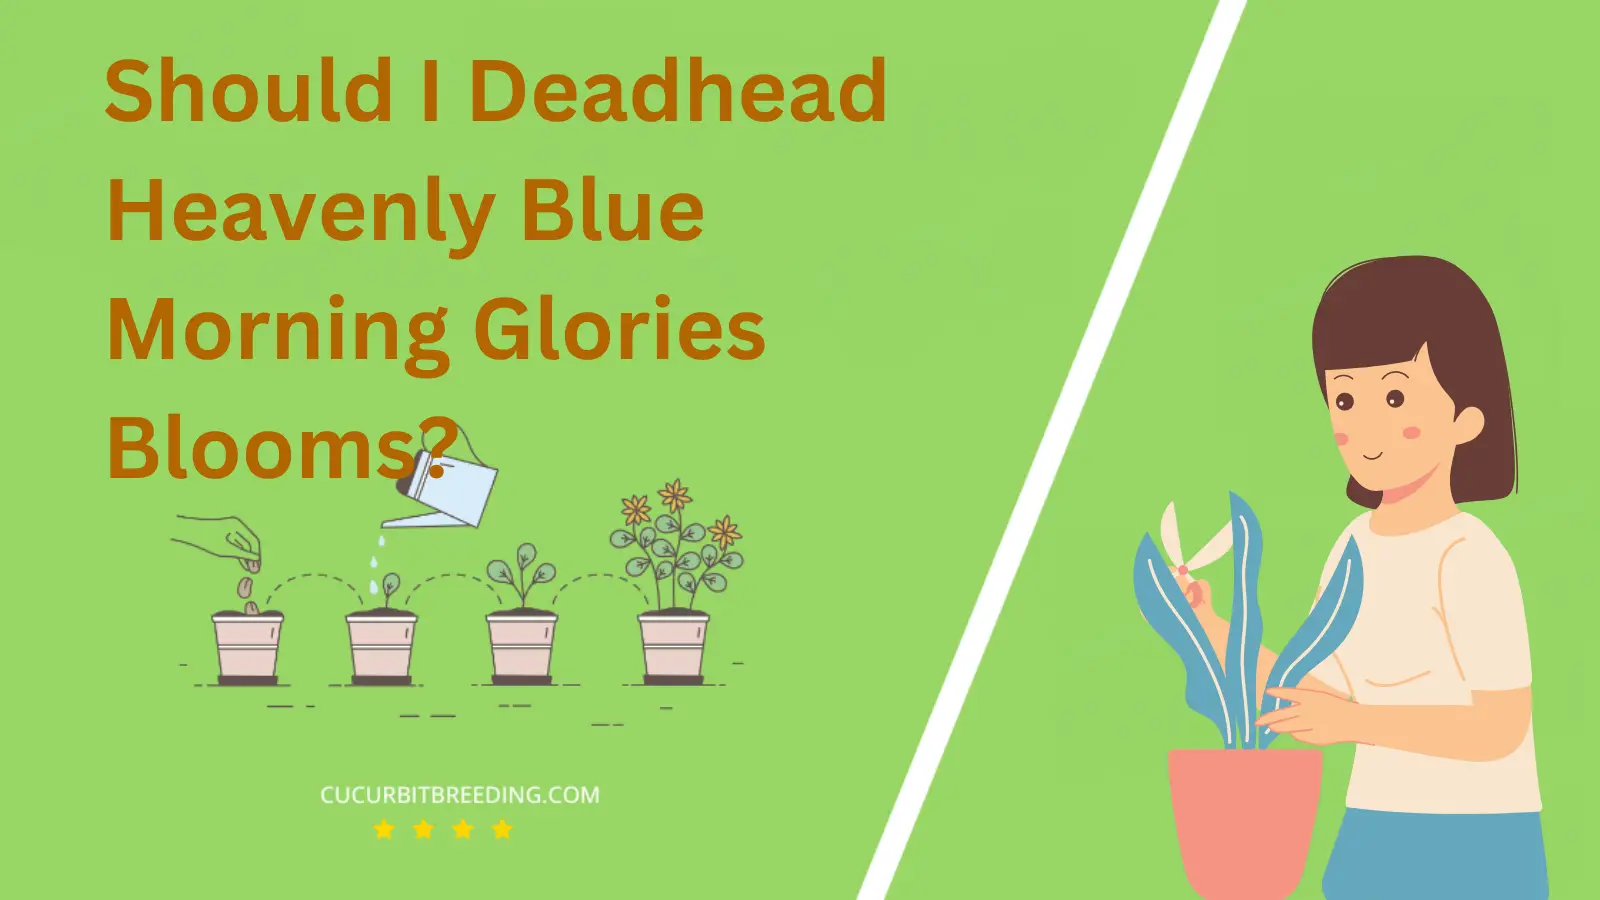 Should I Deadhead Heavenly Blue Morning Glories Blooms?